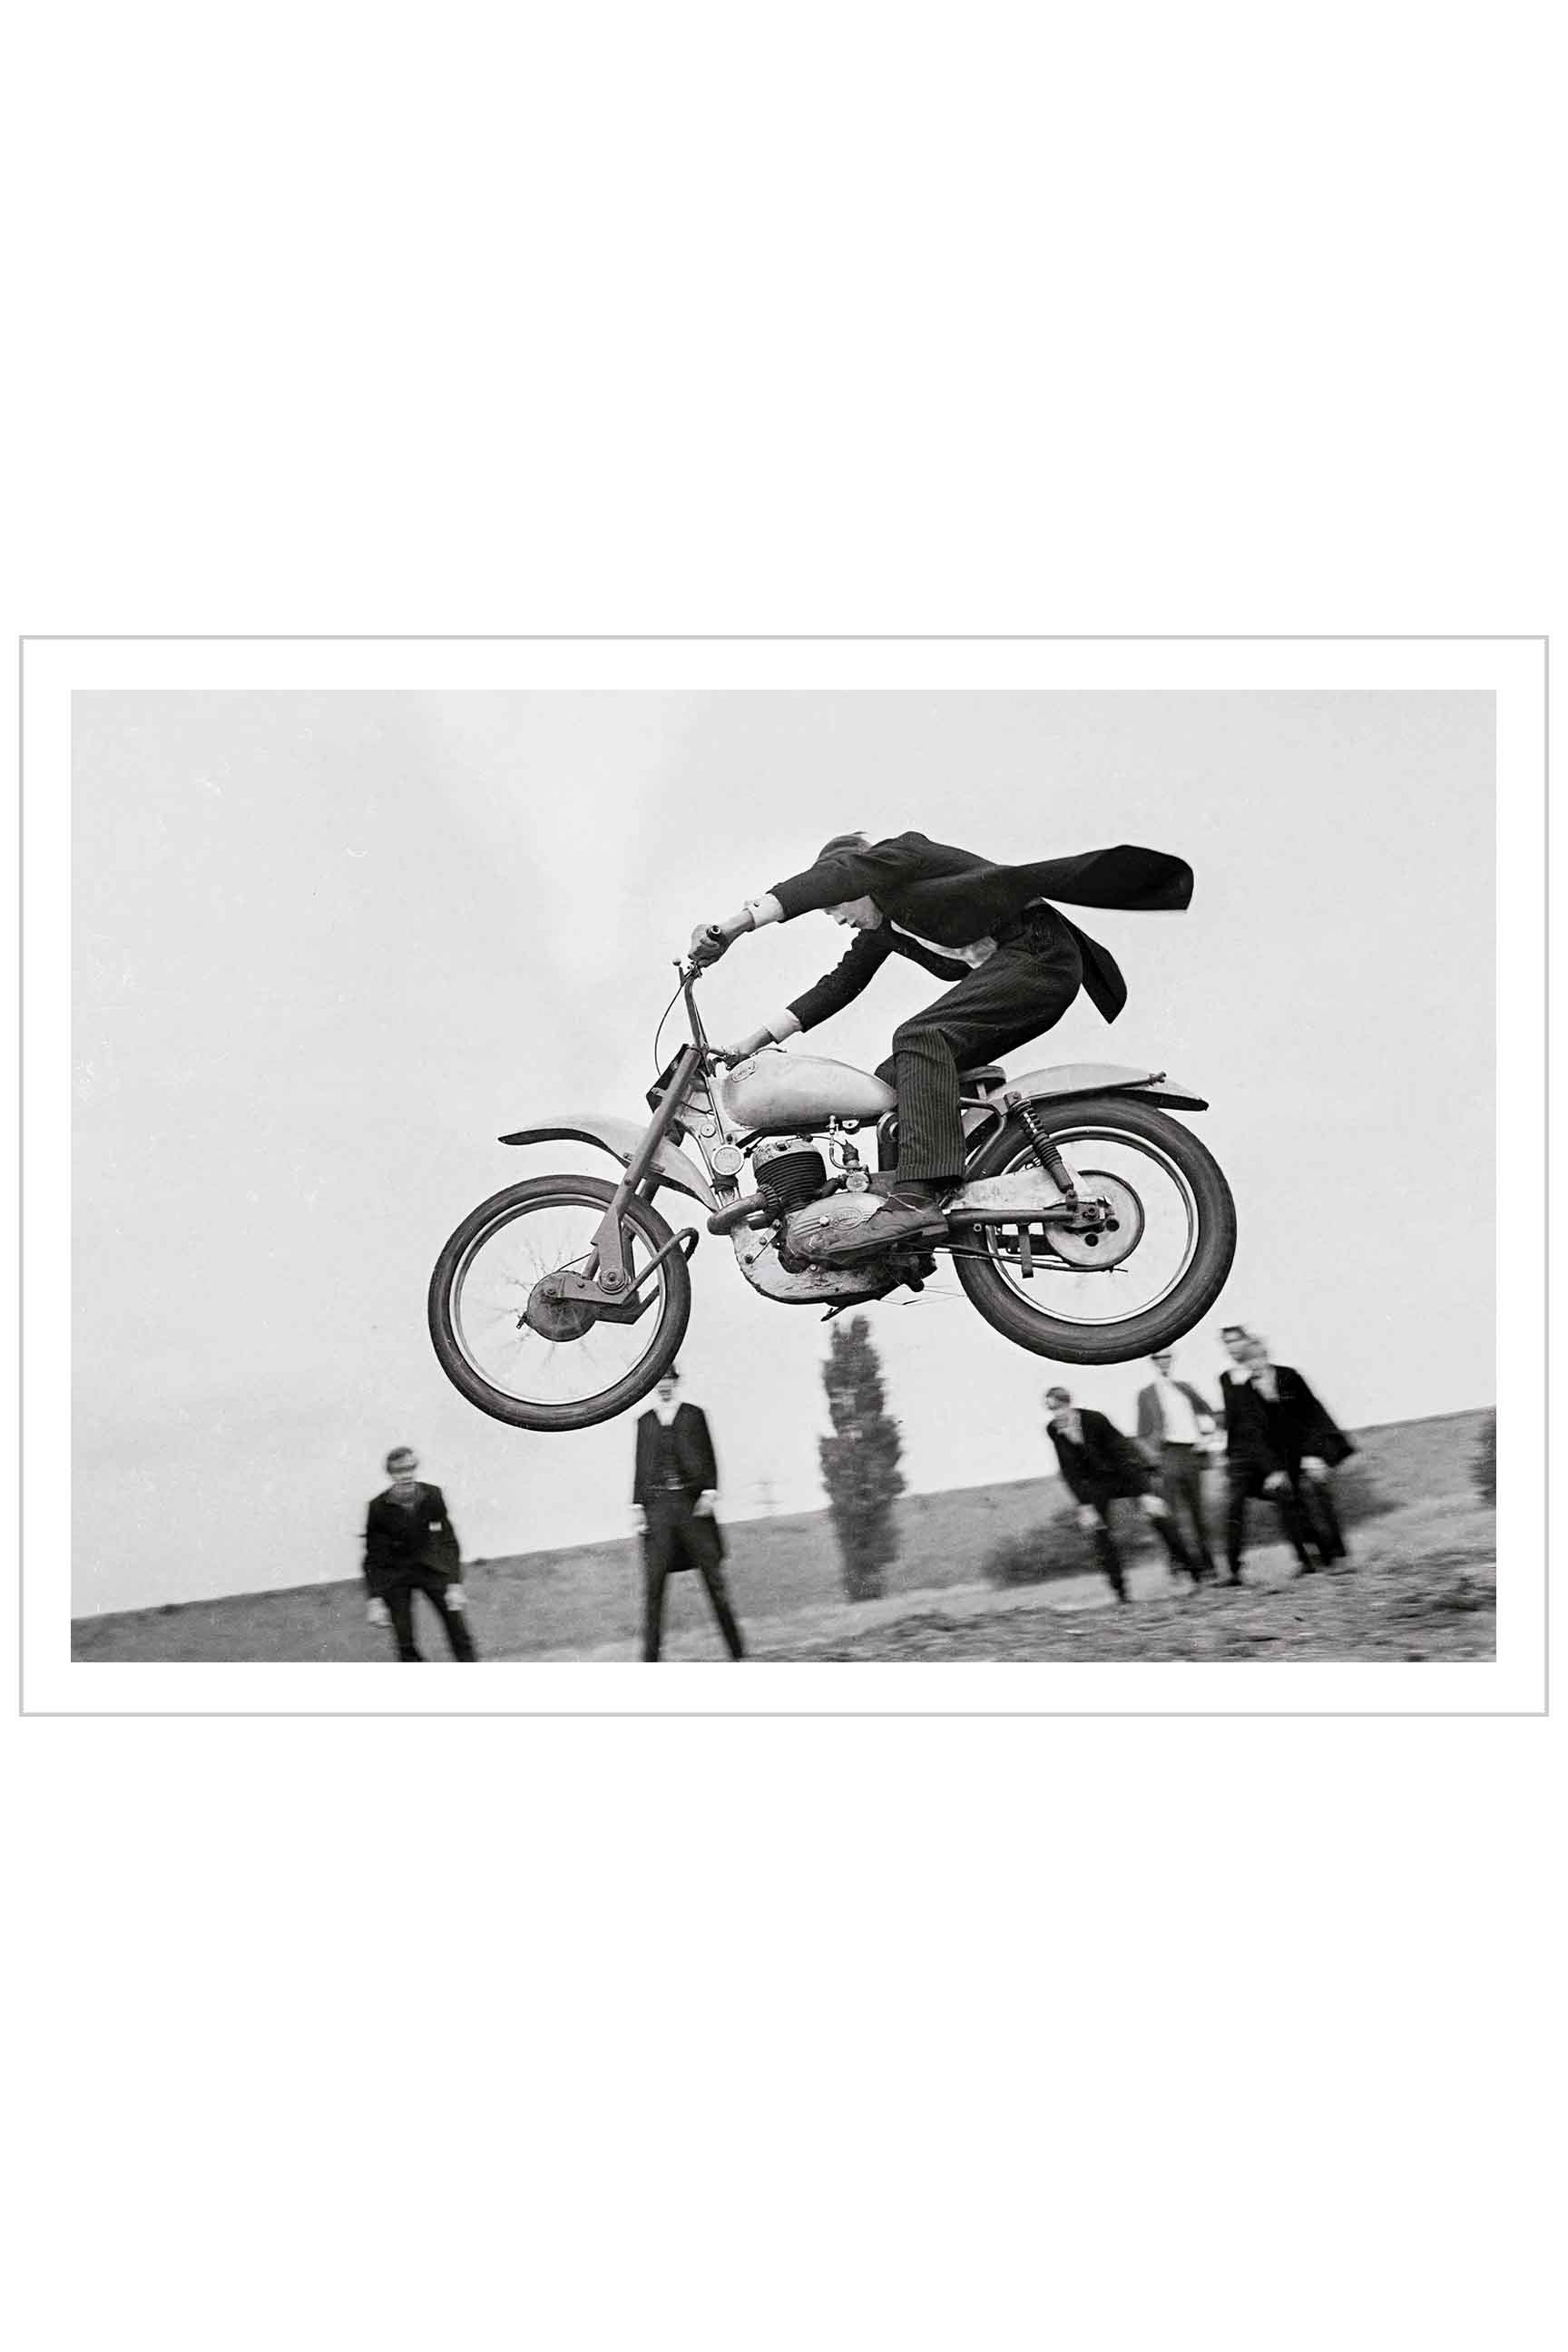 Eton schoolboy jumping his motorcycle.